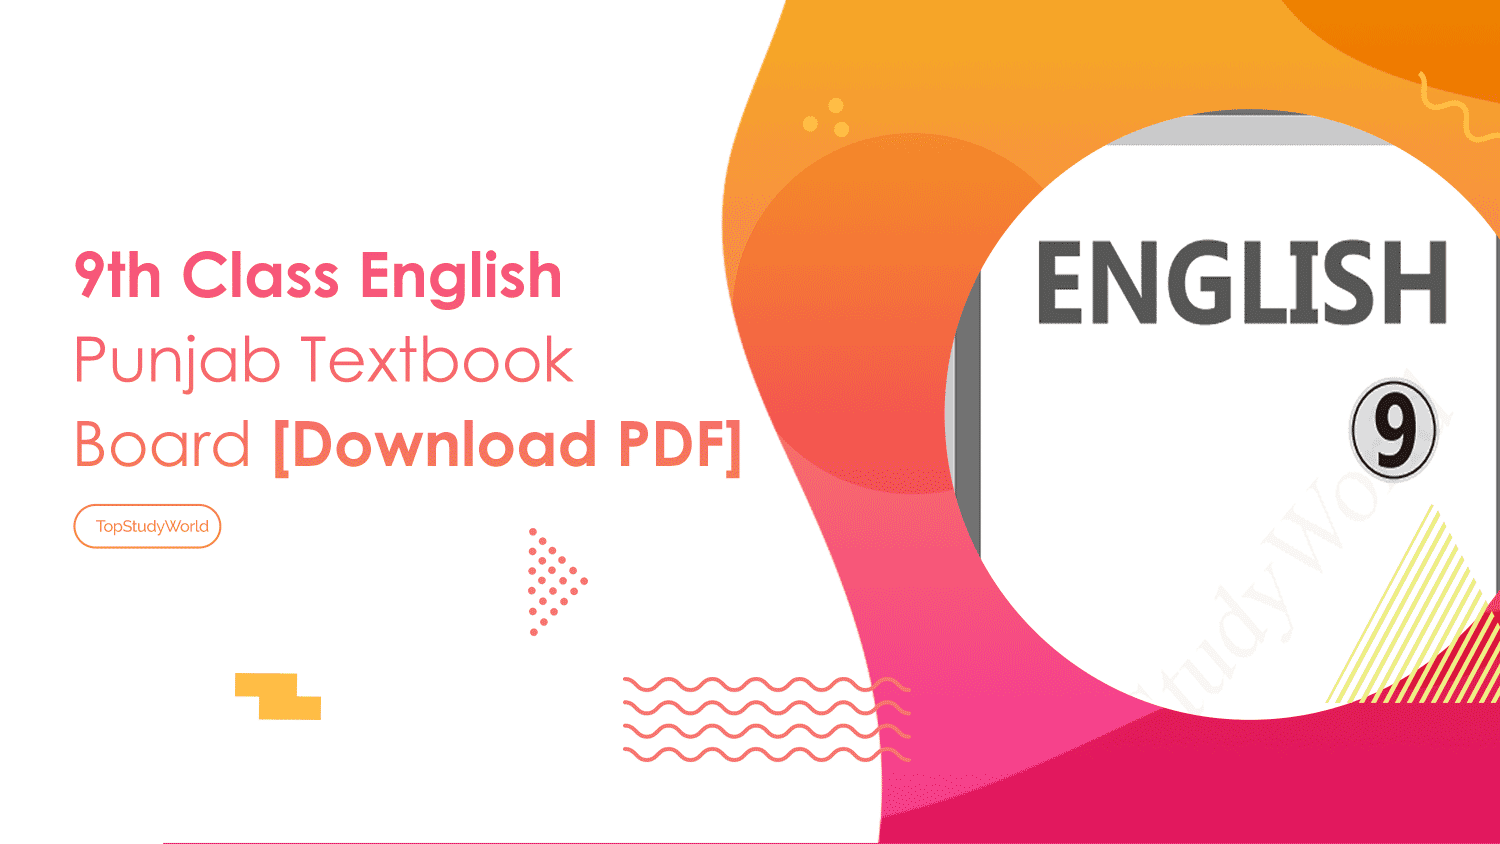 9th-class-english-punjab-textbook-board-download-pdf-top-study-world